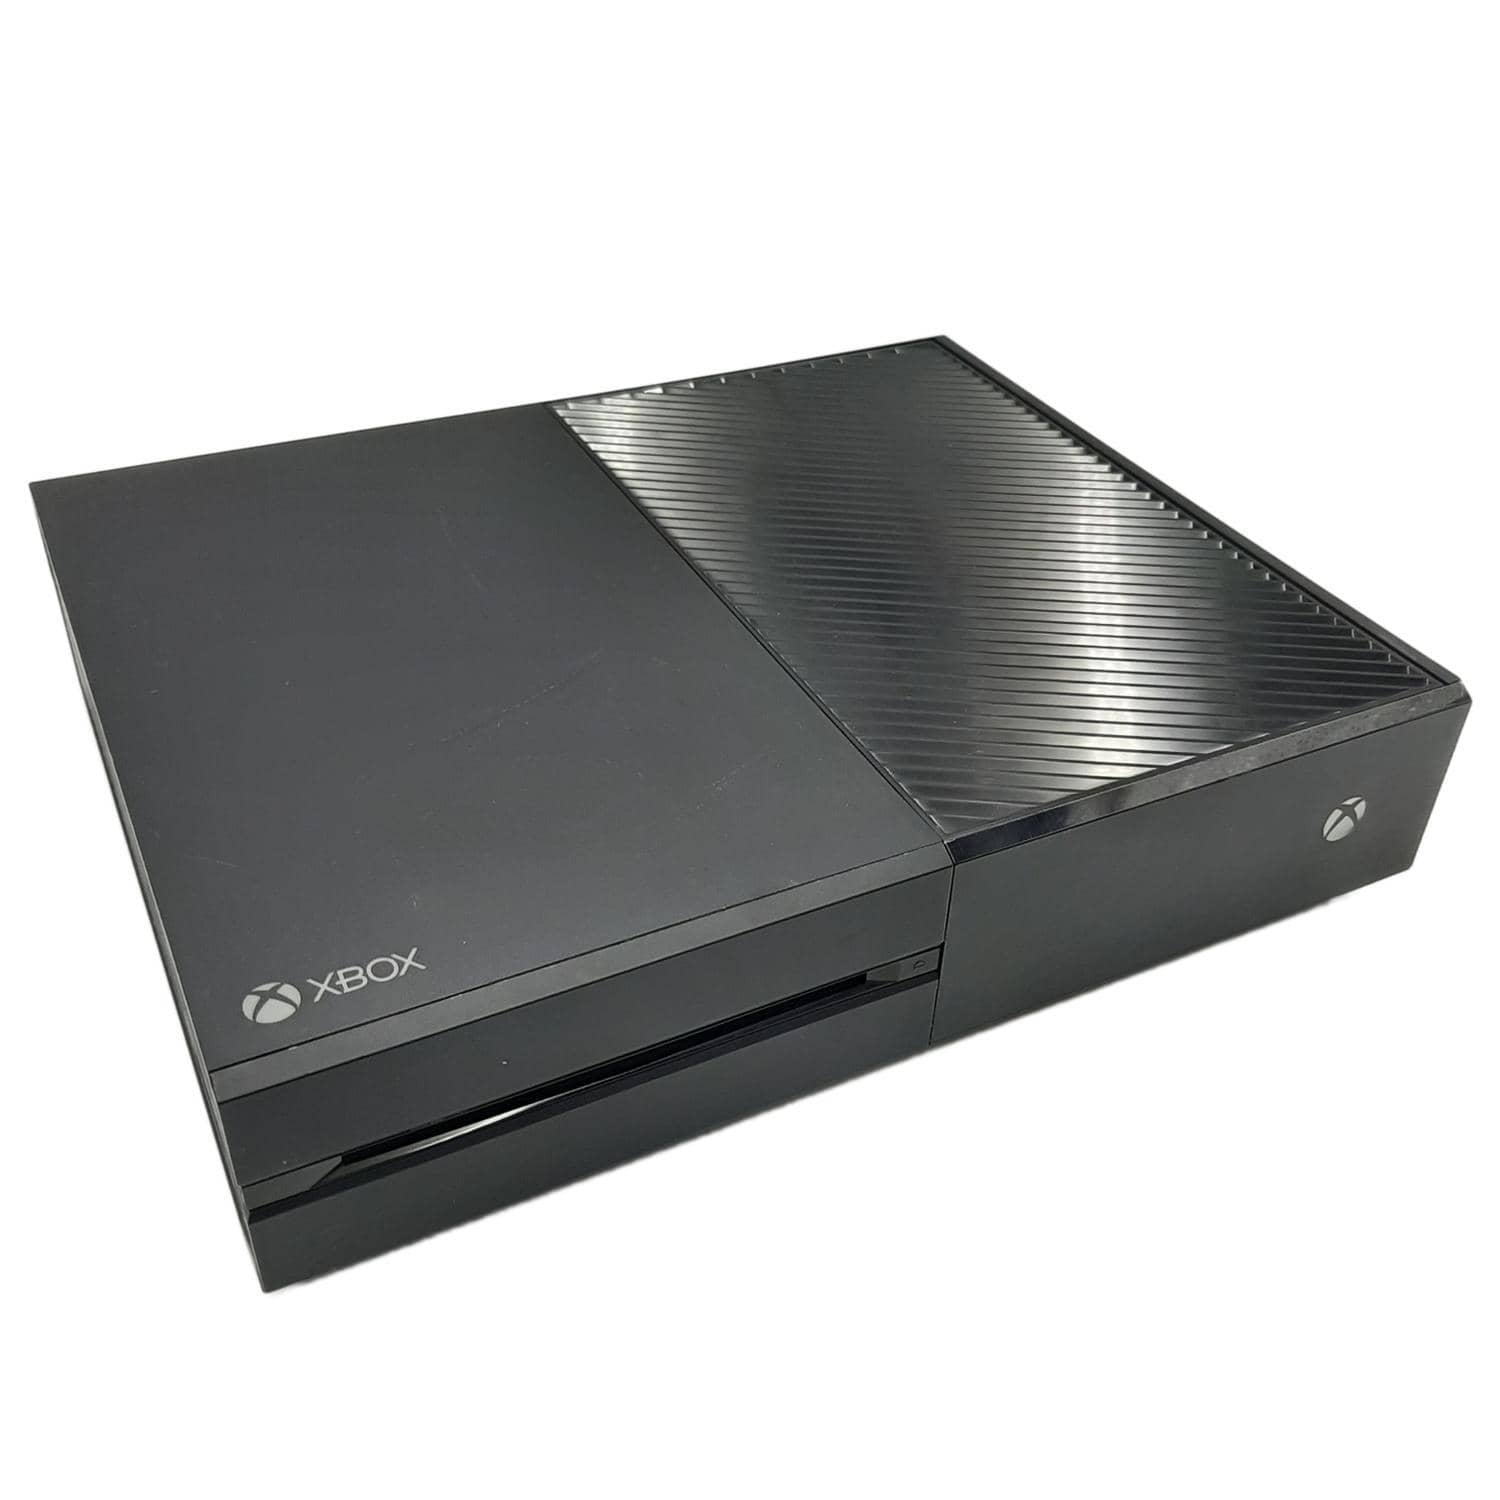 Xbox One 500GB Svart Basenhet (Boxad)